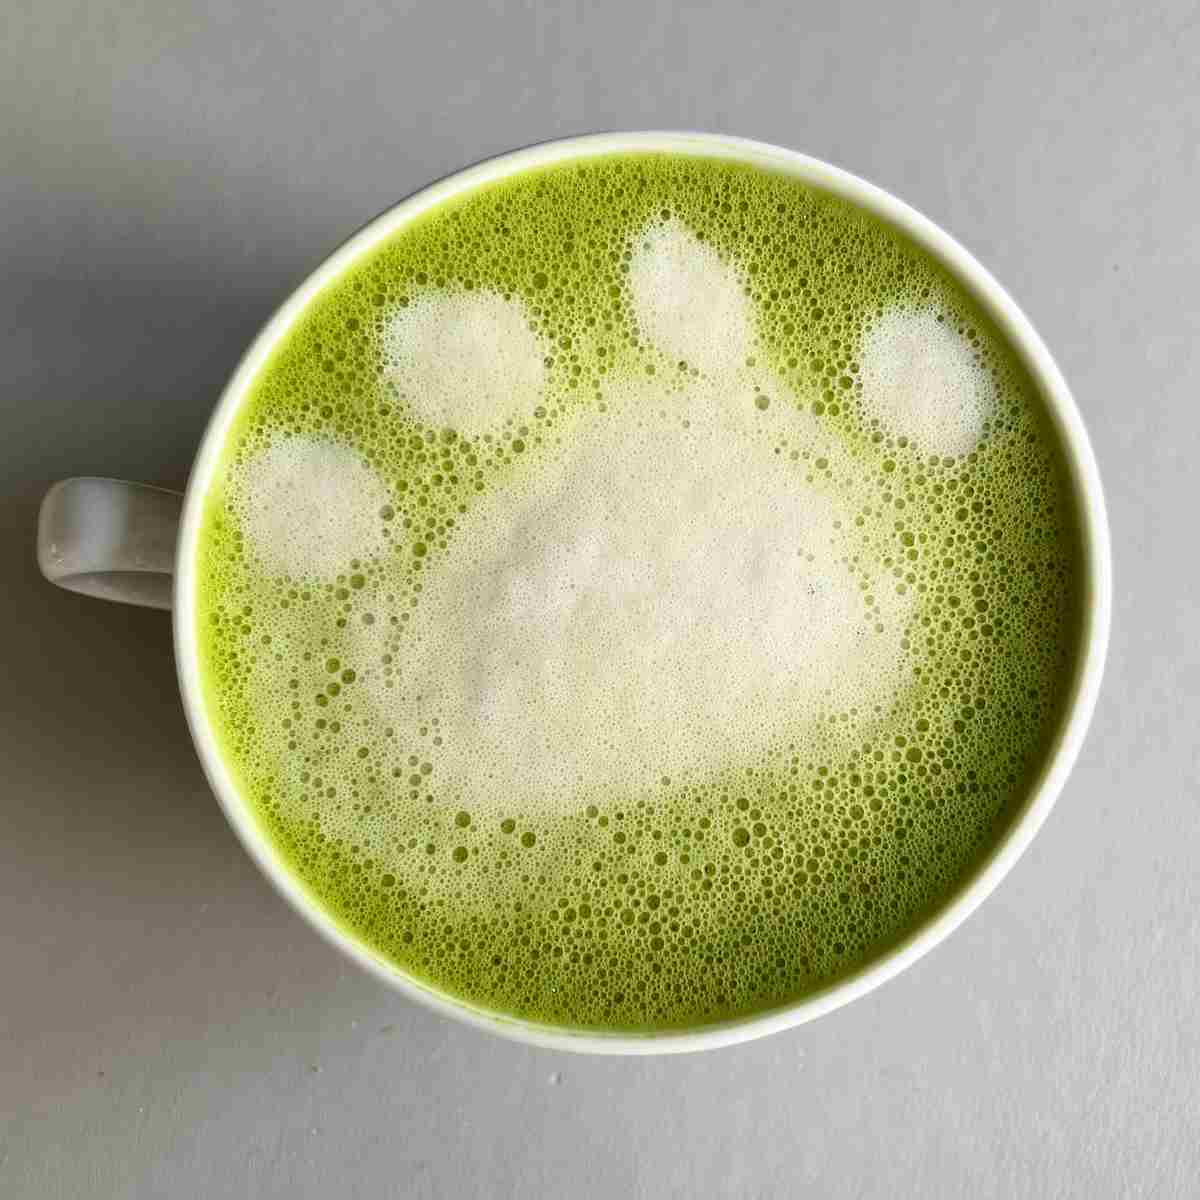 green tea latte with oat milk